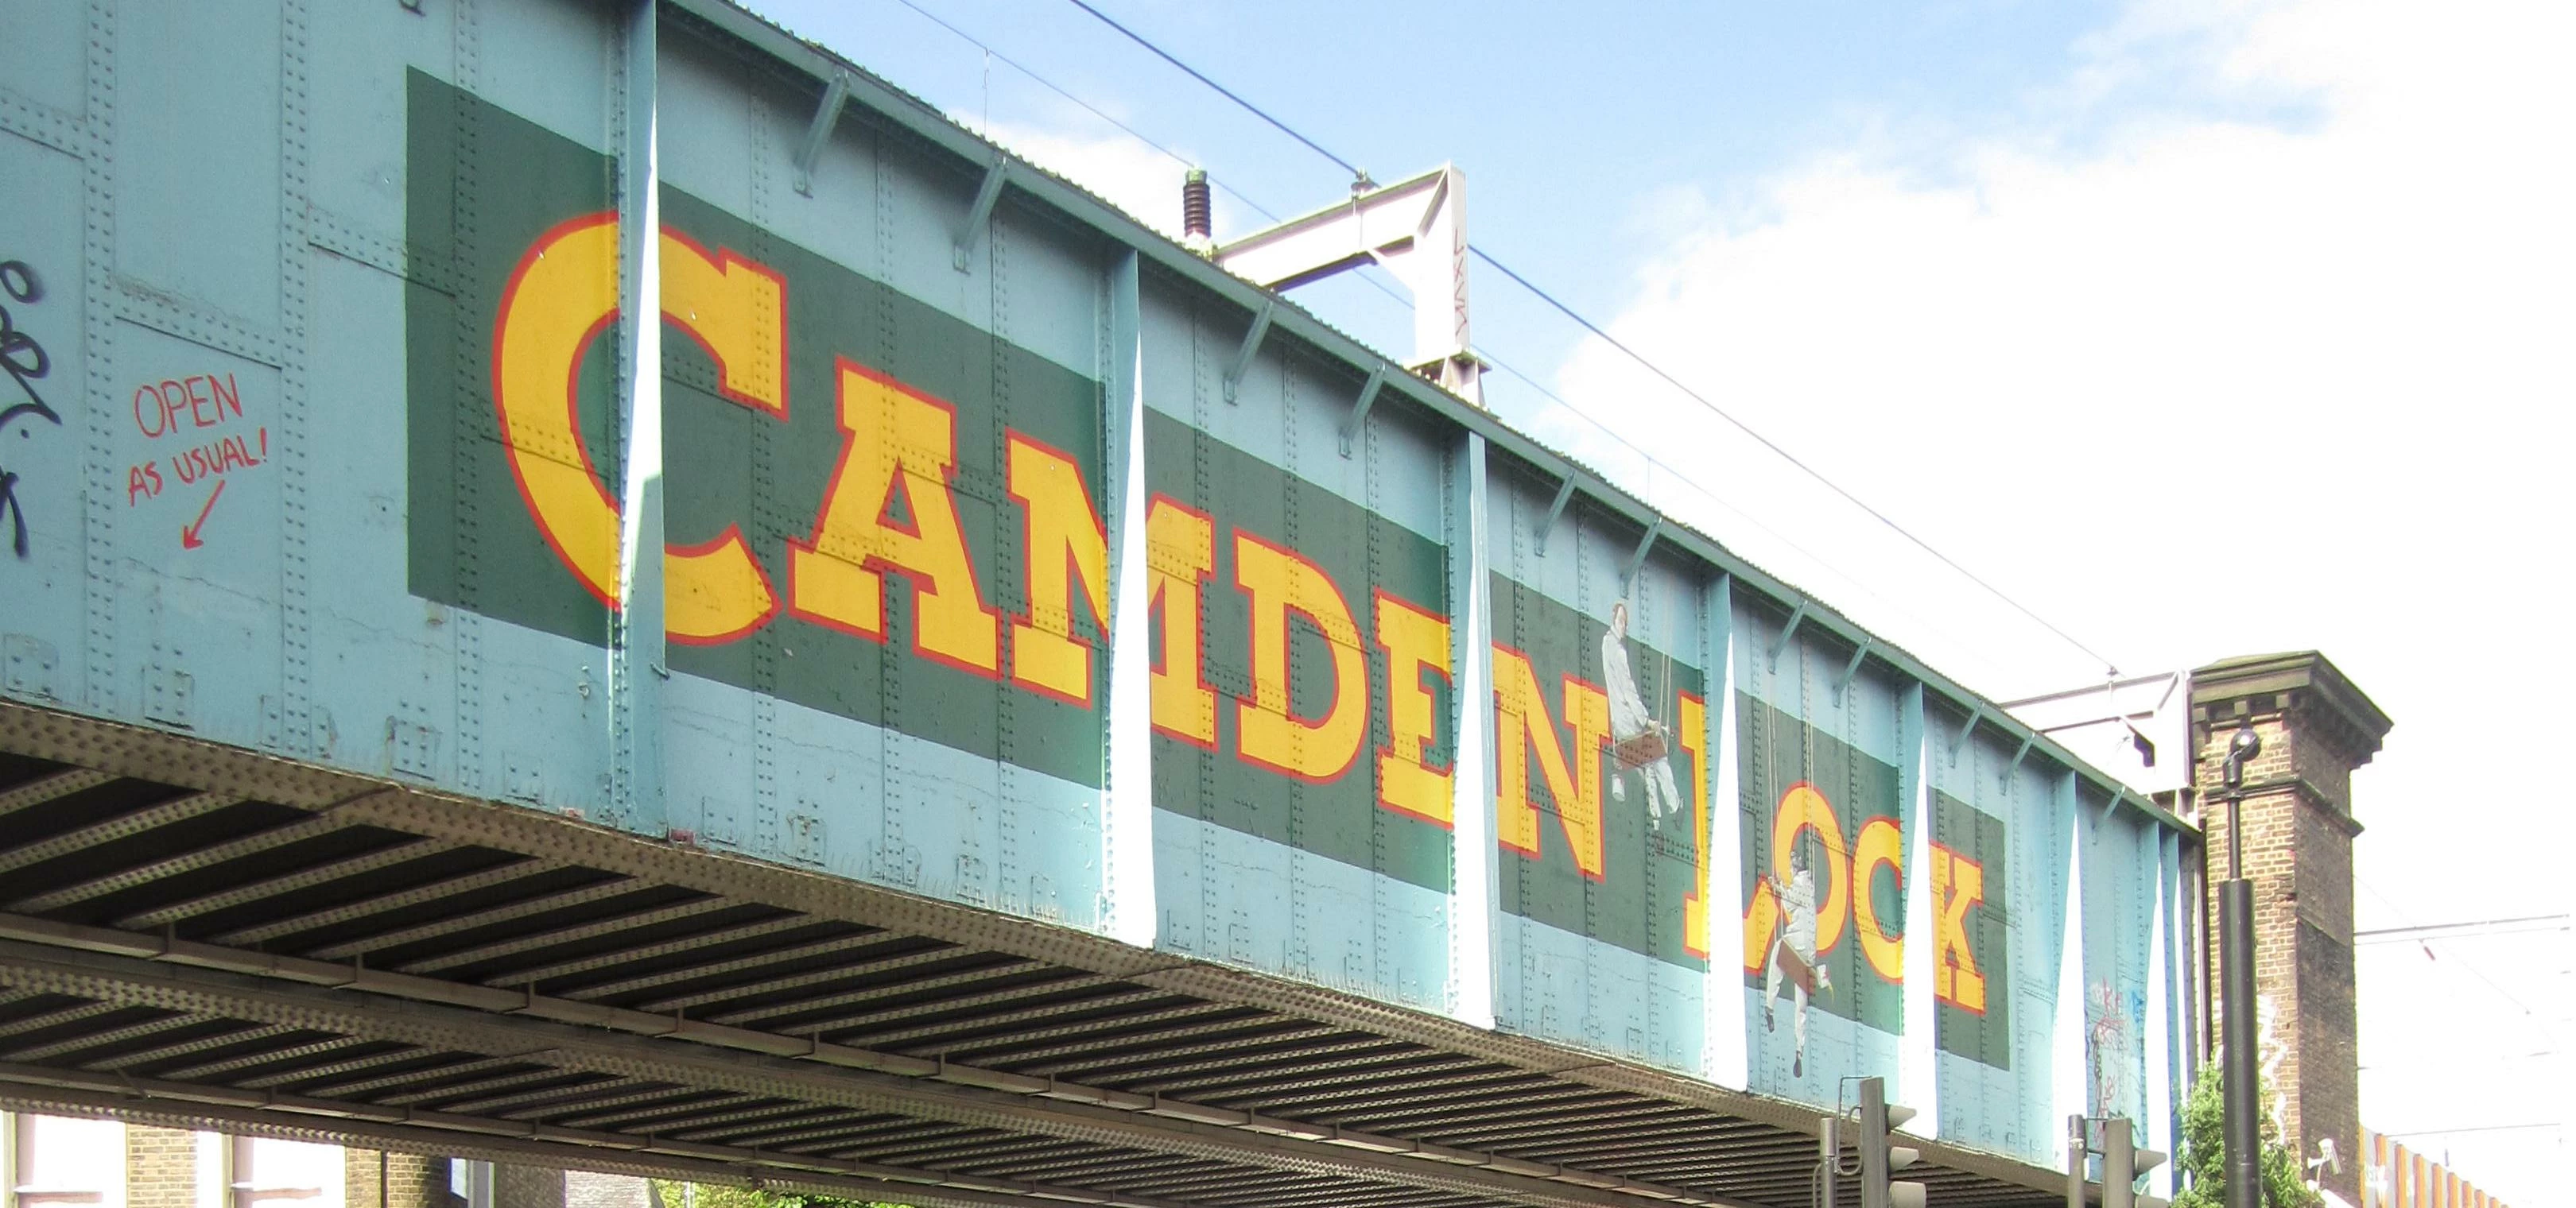 London's Camden Lock